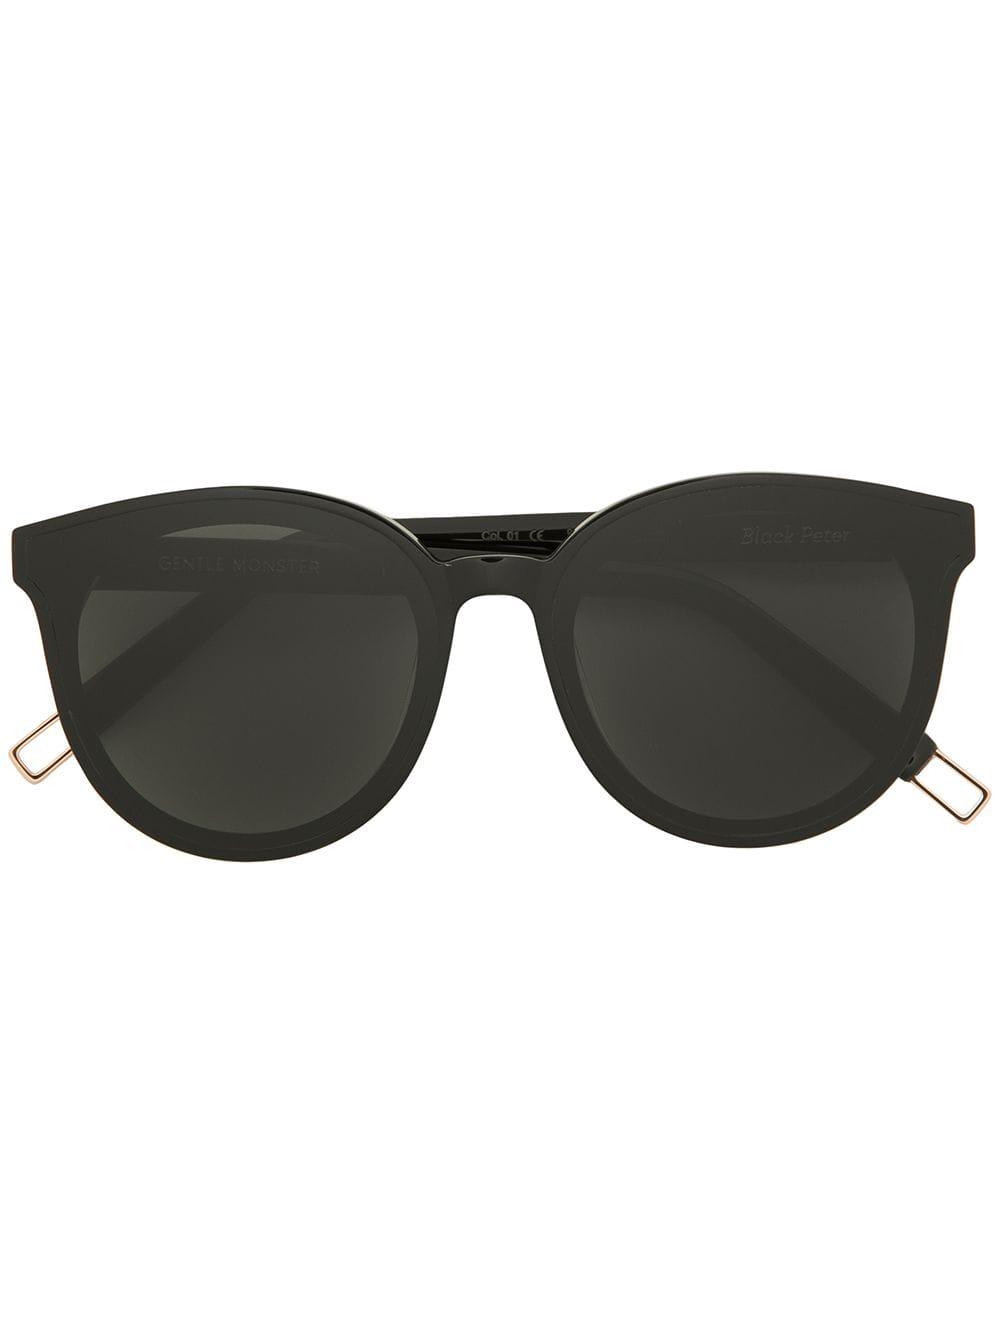 Gentle Monster K-1 02 Sunglasses in Black - Save 26% - Lyst